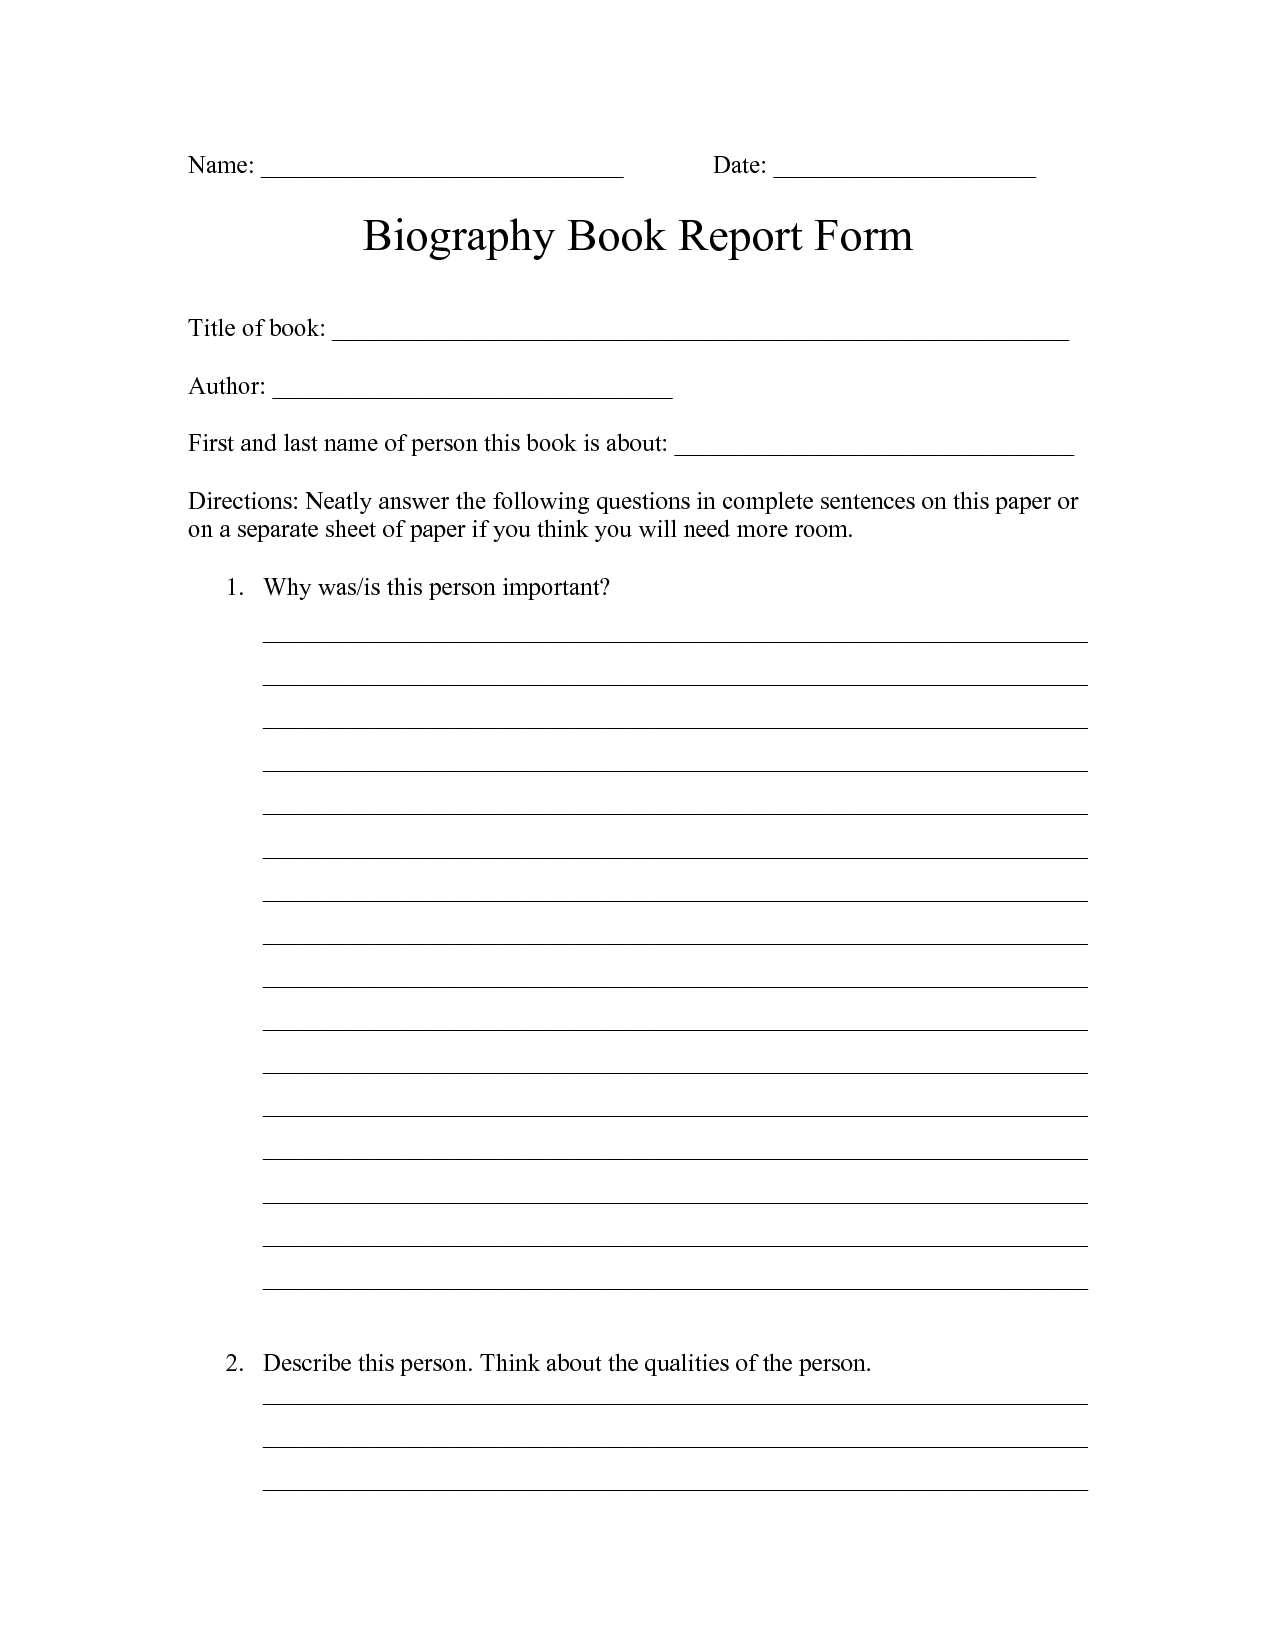 Worksheet Book Report | Printable Worksheets And Activities Inside Biography Book Report Template